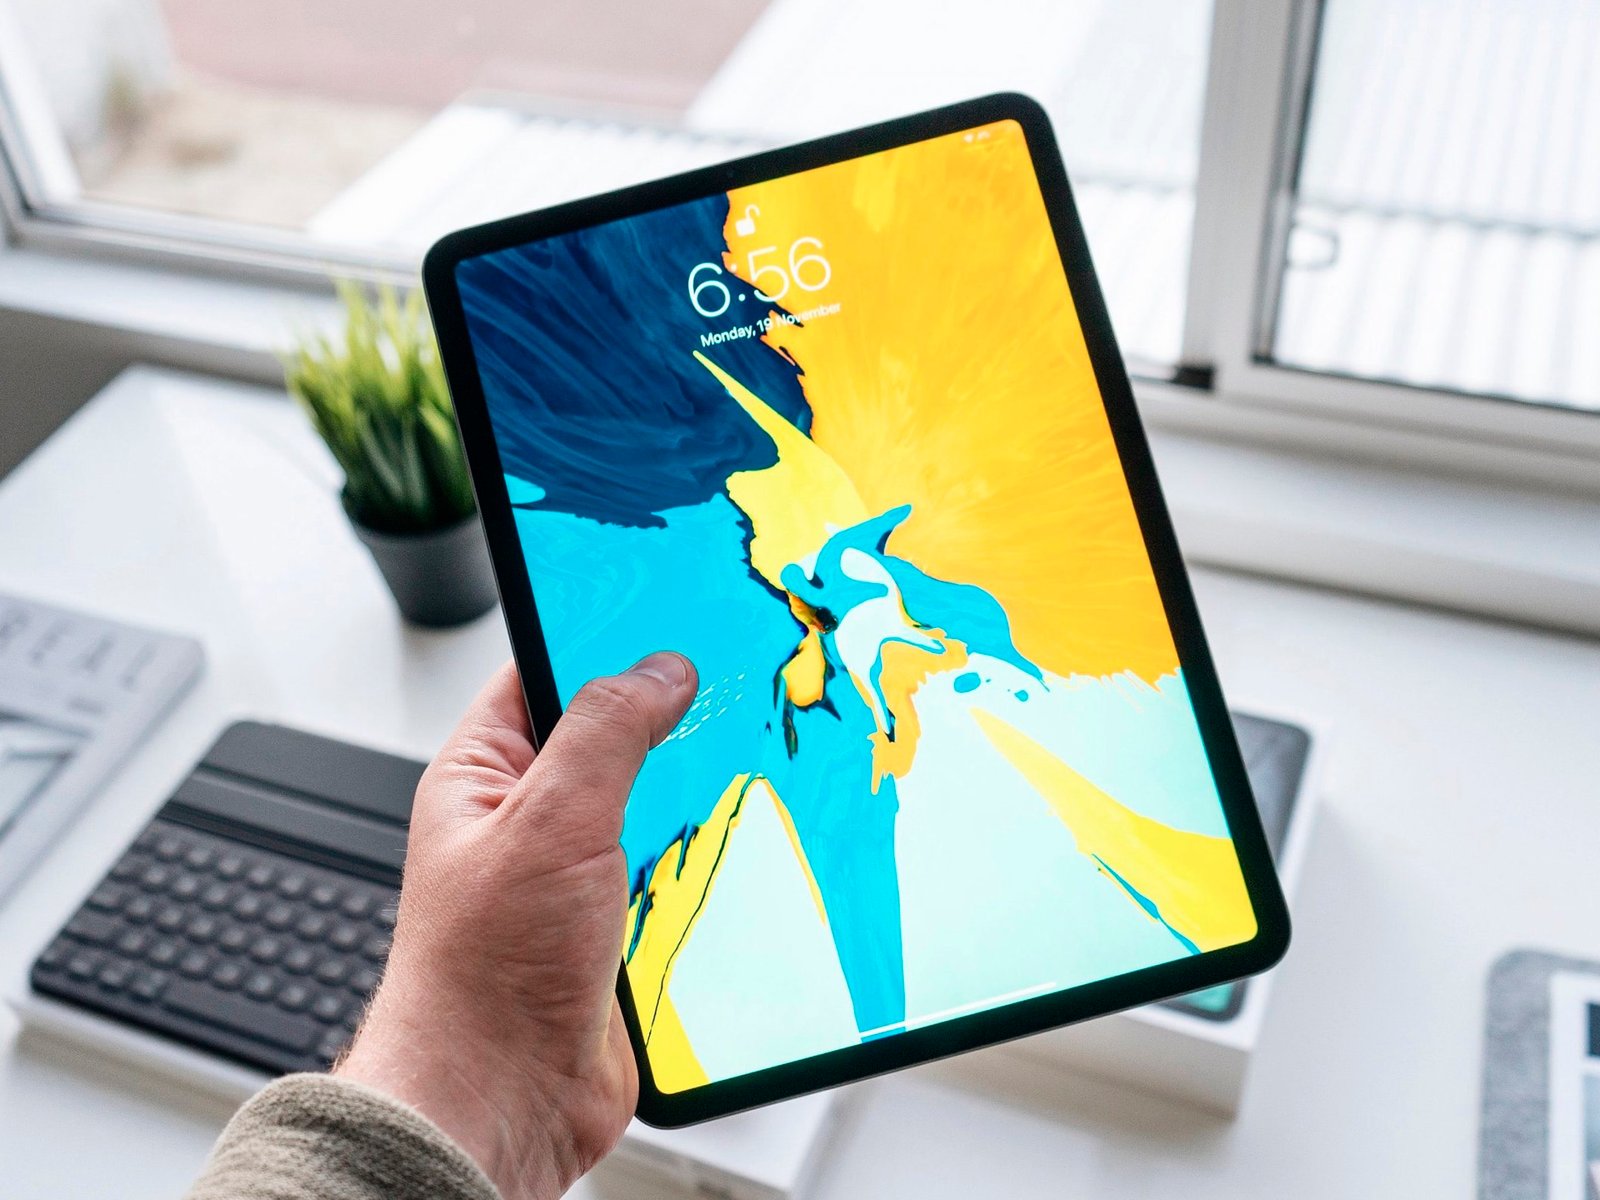 Conectar un ratón al iPad como si fuera un PC